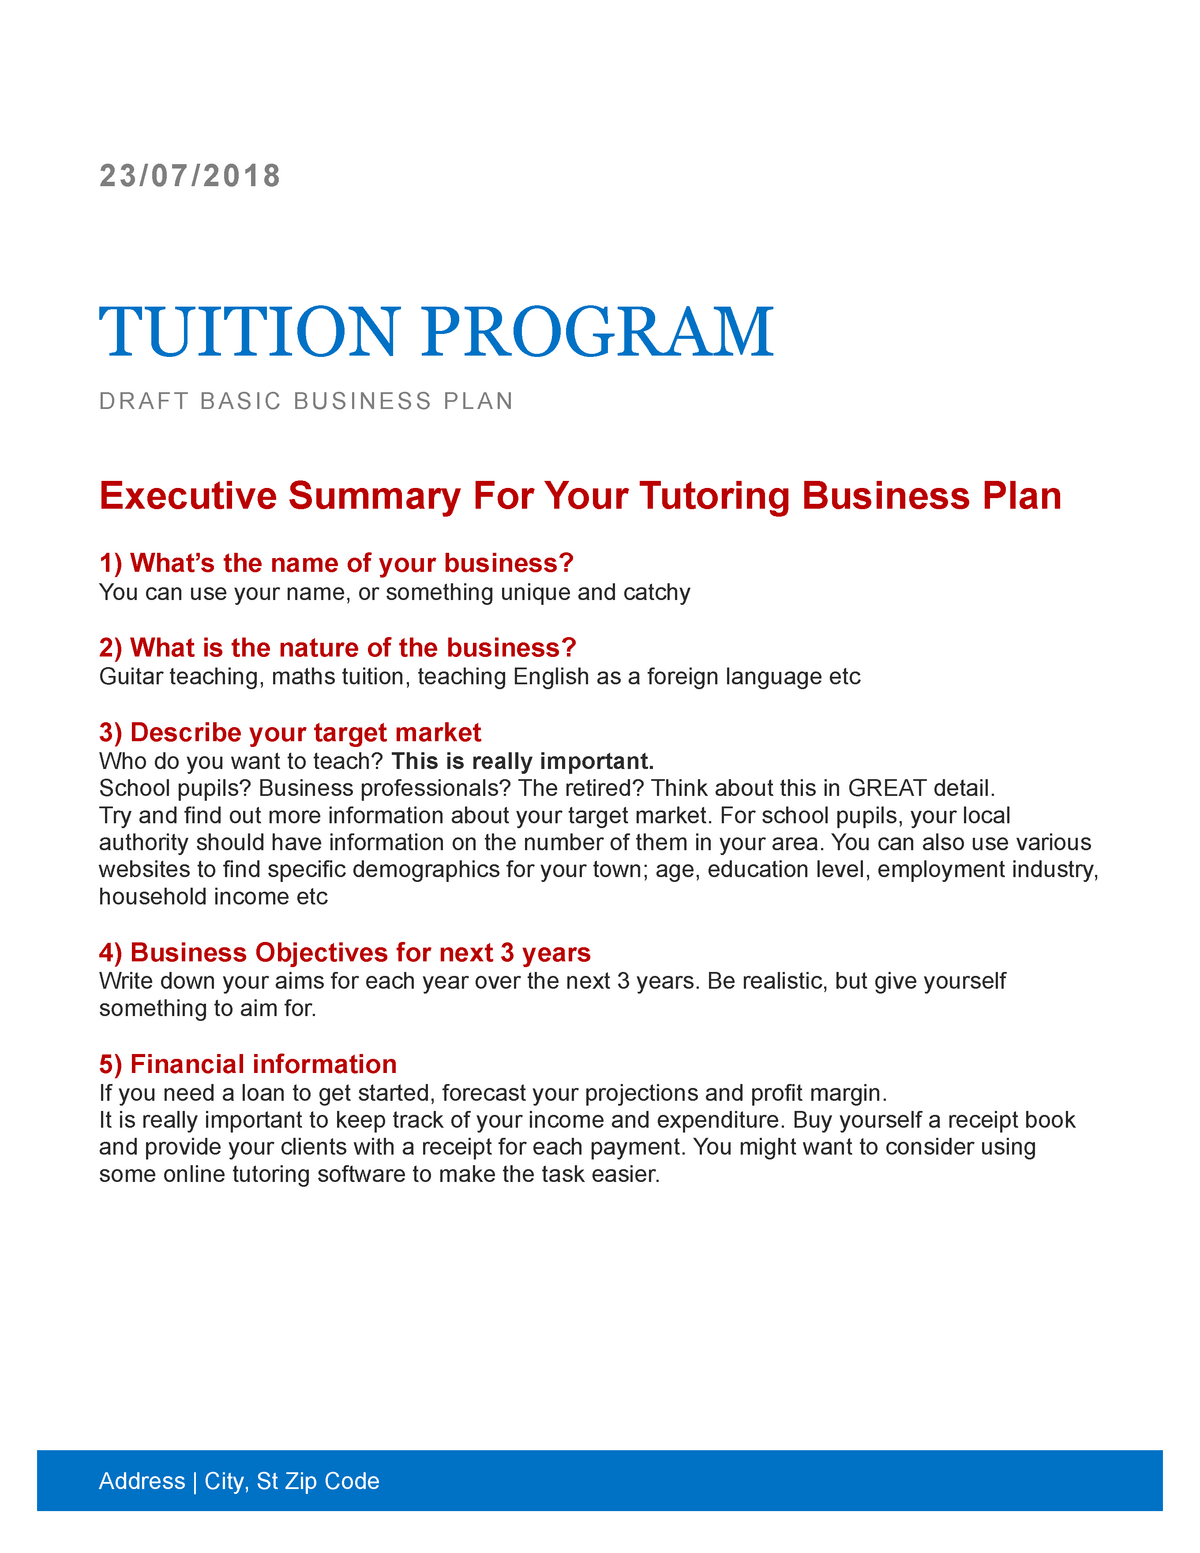 tutoring services business plan pdf